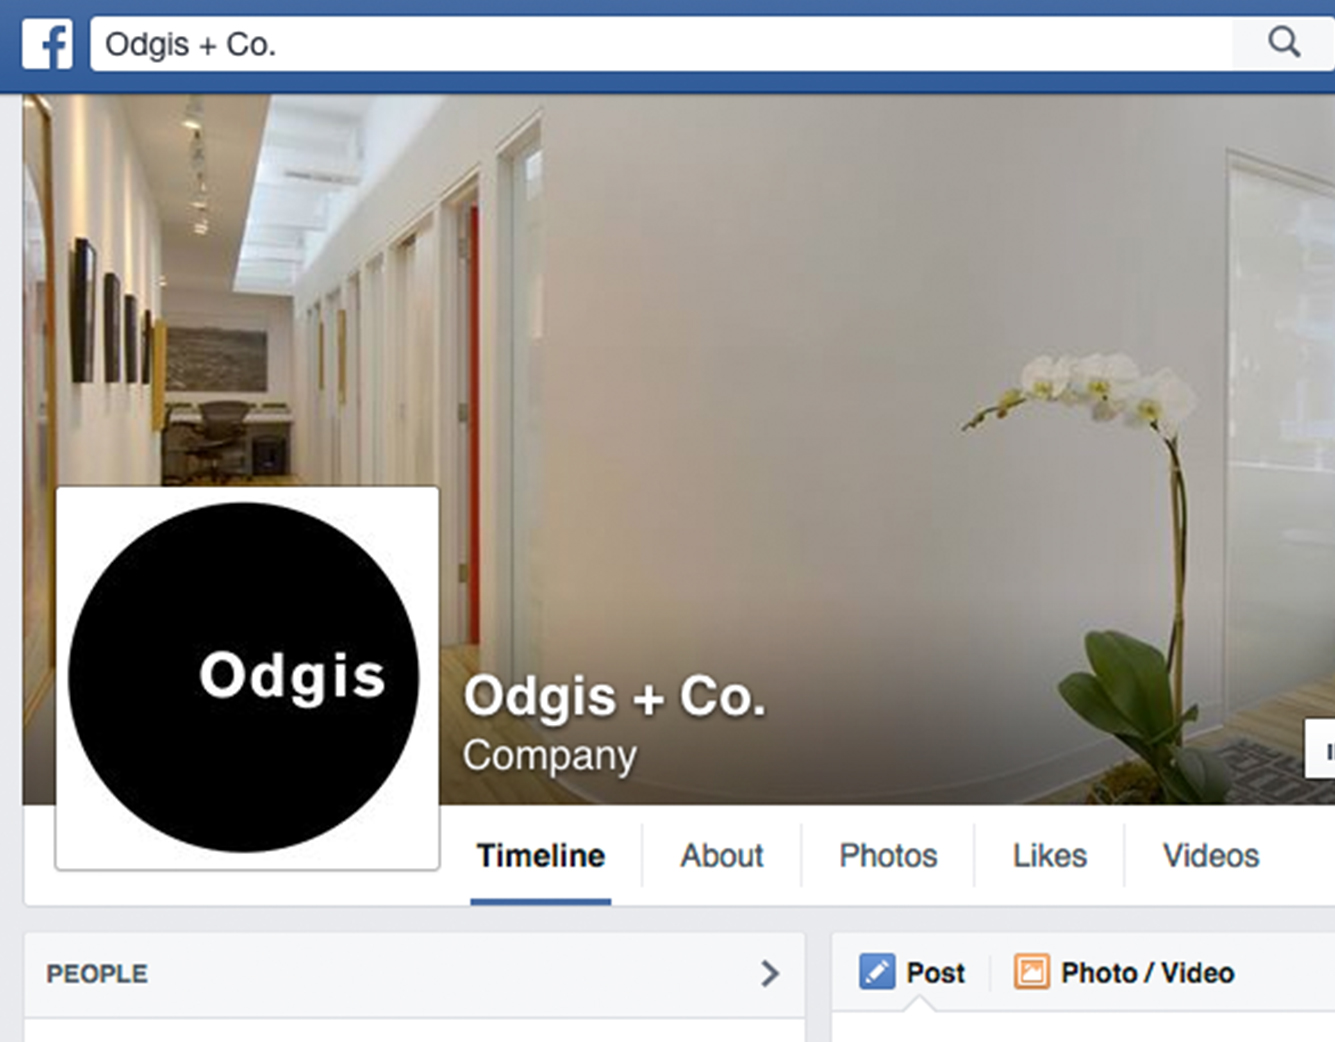 Odigs + Co's Facebook